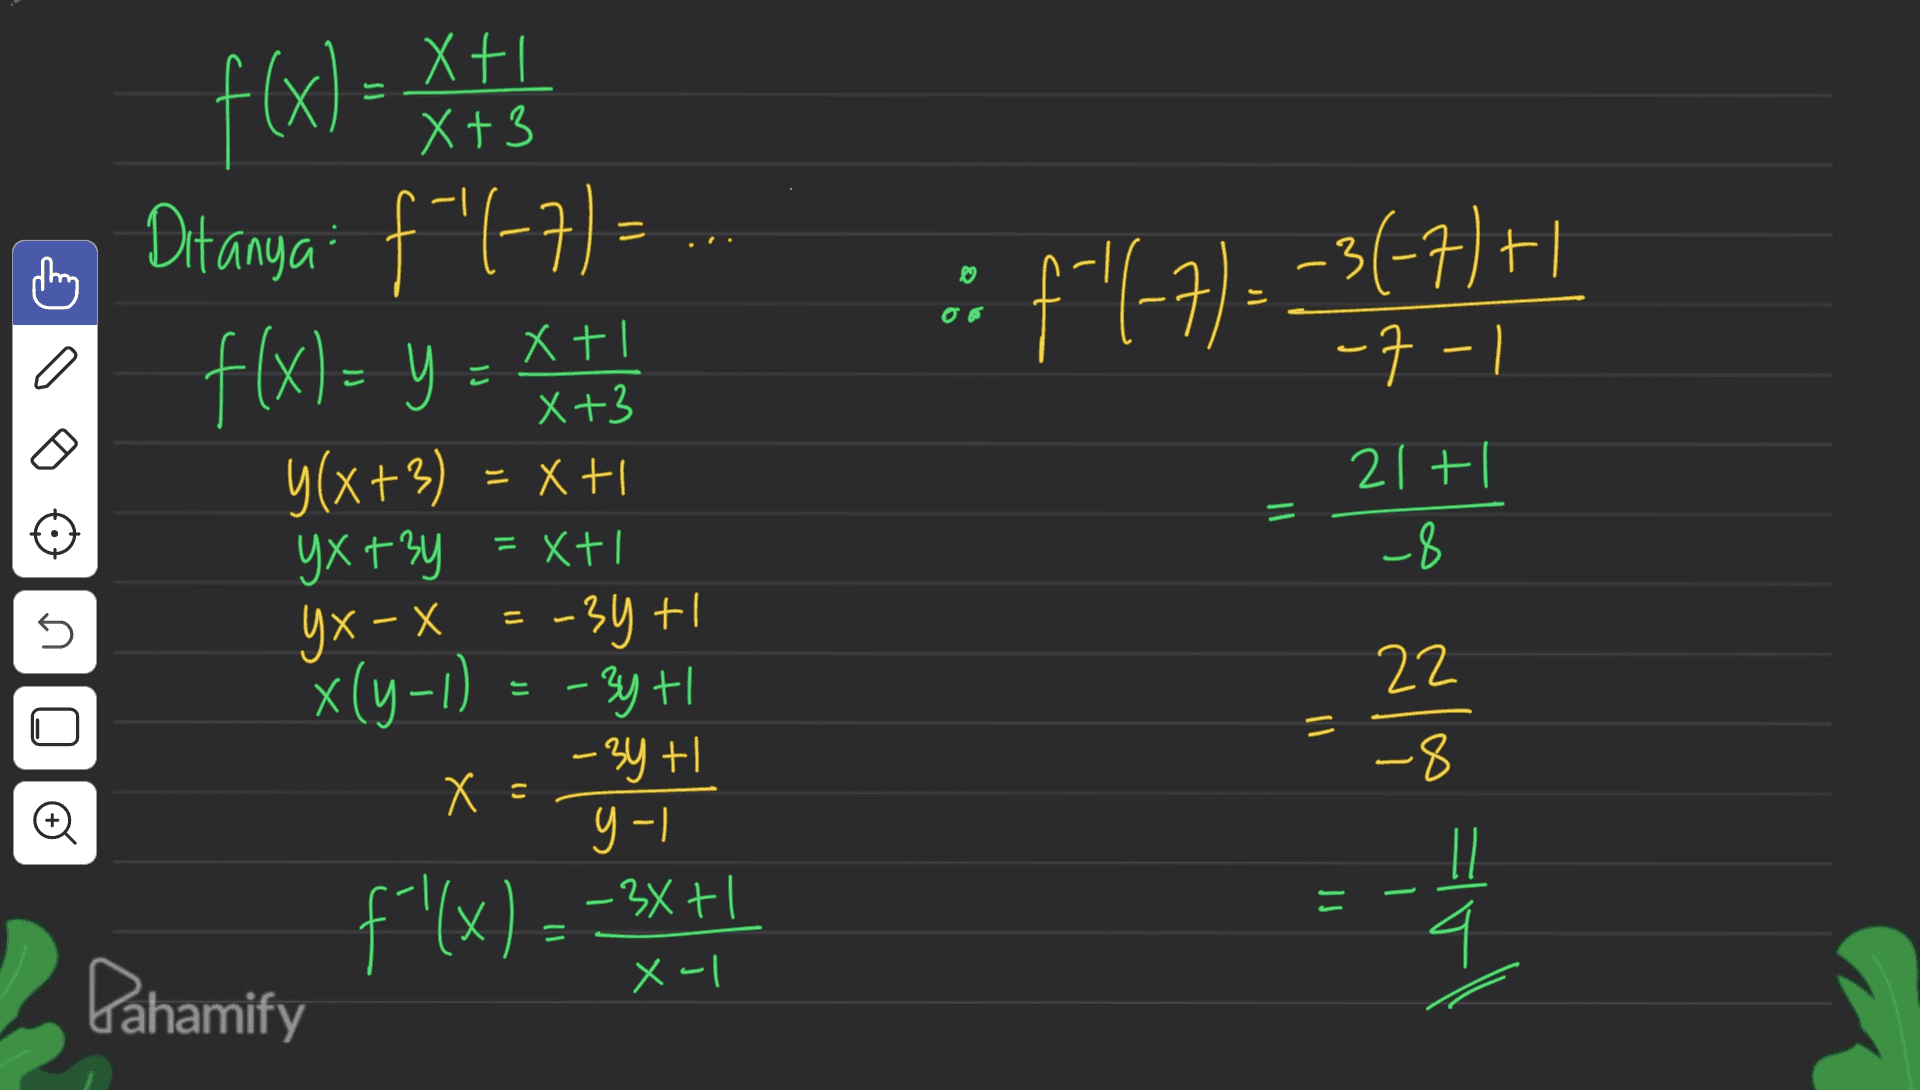 S X +3 f(x) = Xt Ditanya: f '(-7)= f(x)= y = x + 3 = = = ľ •. f '(47= -3(-7)+1 - a -7-1 21+1 -8 = no E 3 Y(x+3) - Xti yx+3y = x+1 X s Yx - X -34 + x(4-1) - 3y + - 3y + X X = Y-1 + Pahamify X-1 = 22 -8 こ - = f''(x) = -3x+1 =lv = 